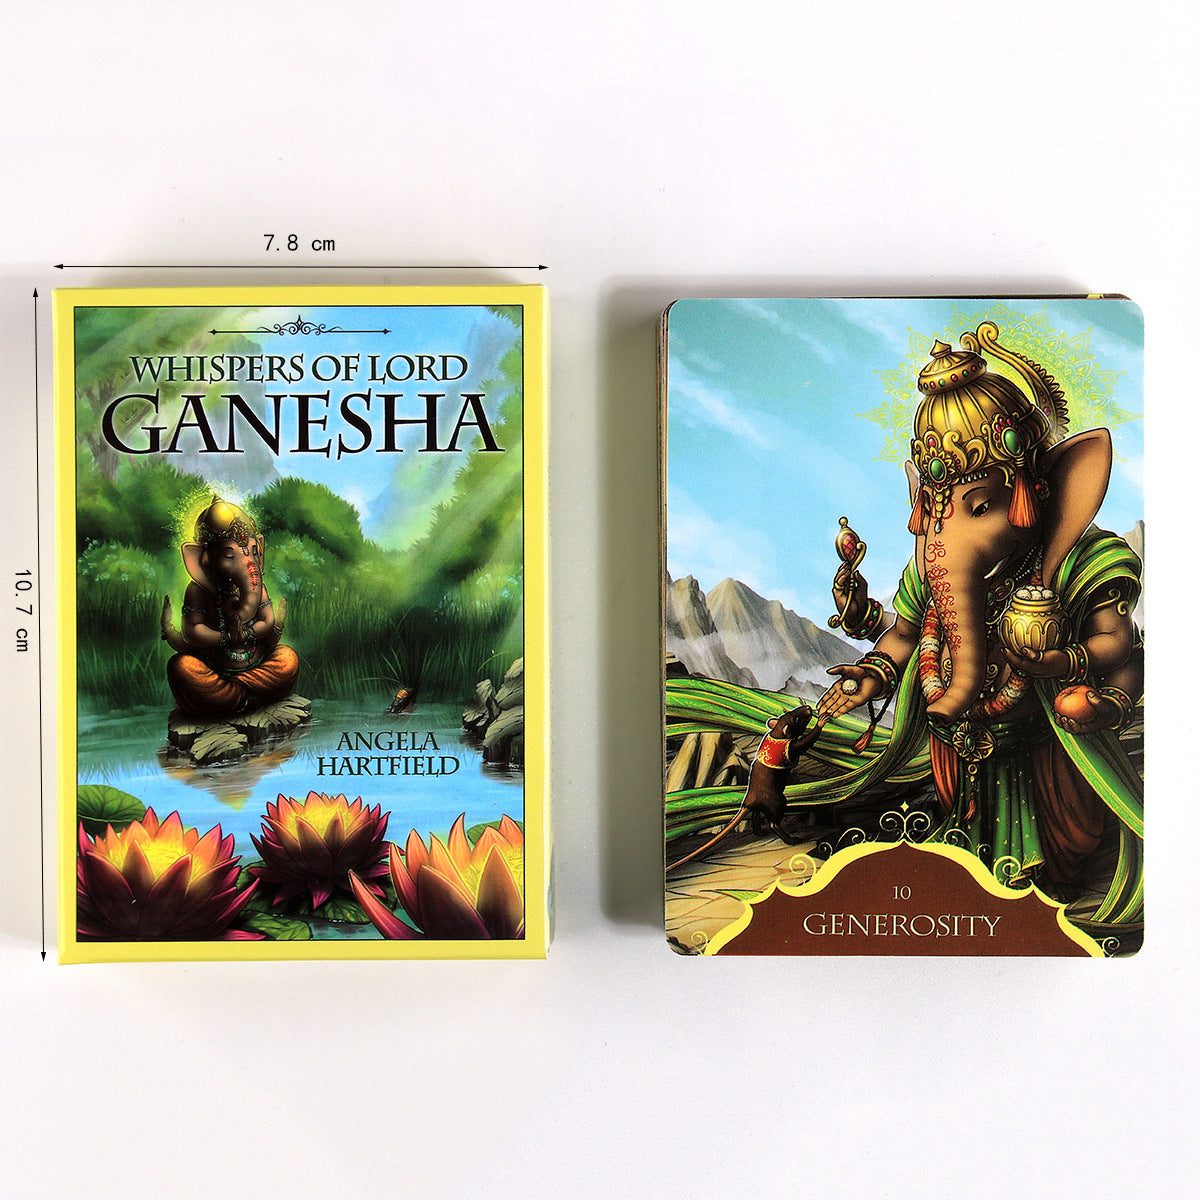 Maramalive™ presents the Whispers Of Lord Ganesha Oracle Card Tarot.